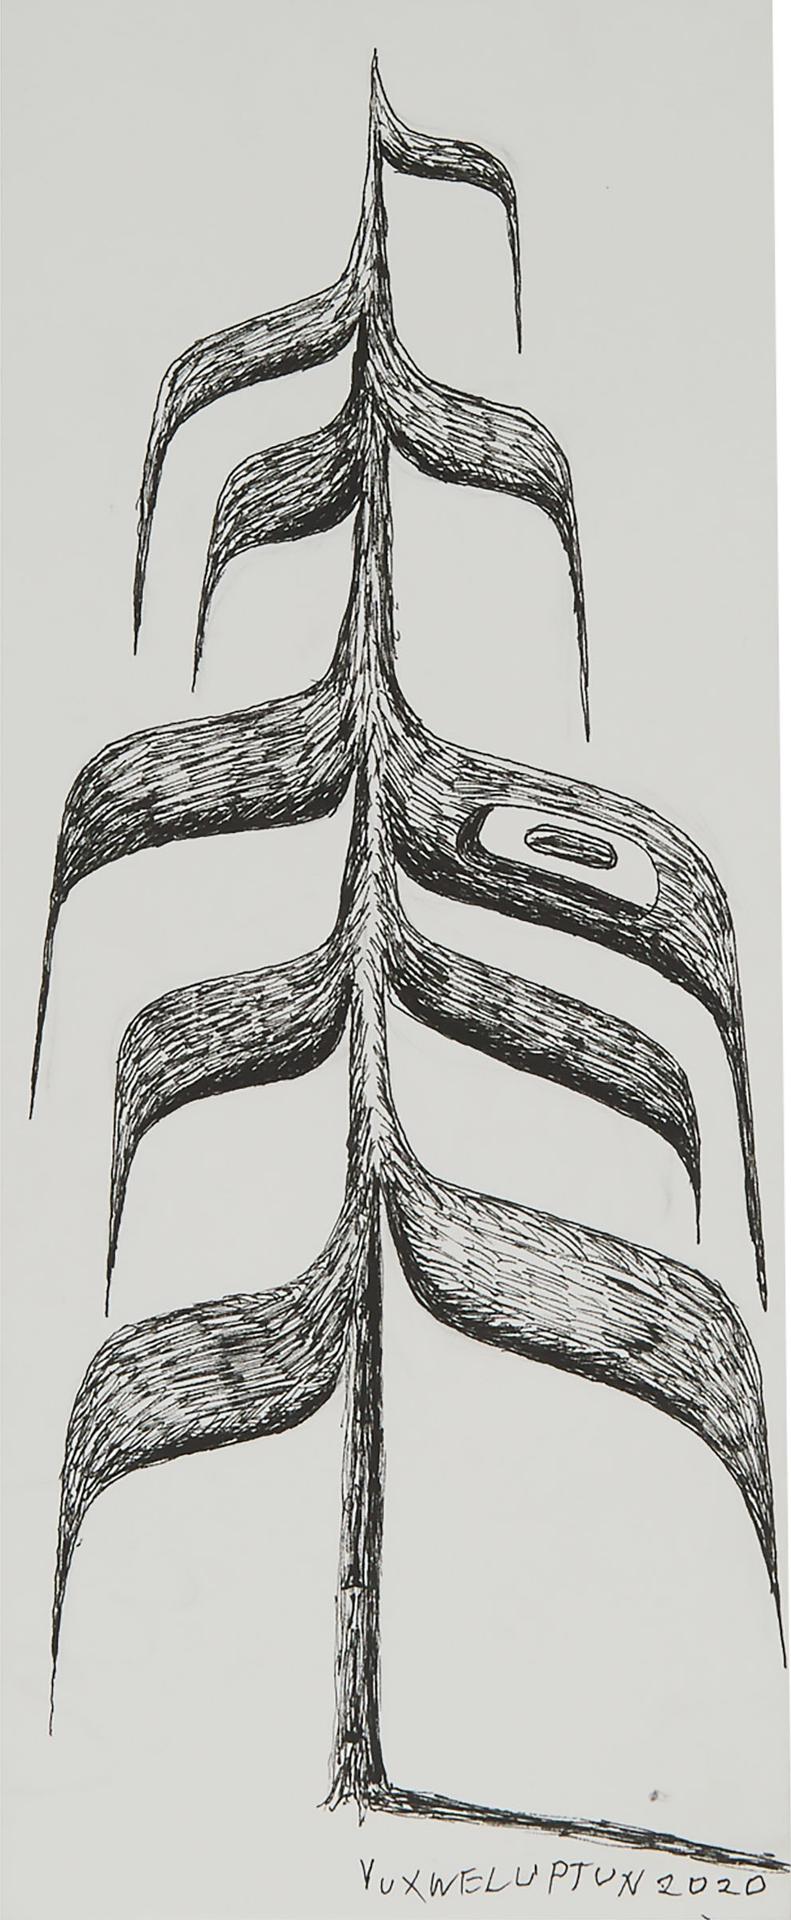 Lawrence Paul Yuxweluptun (1957) - Neo Tree Study #2, August 2020